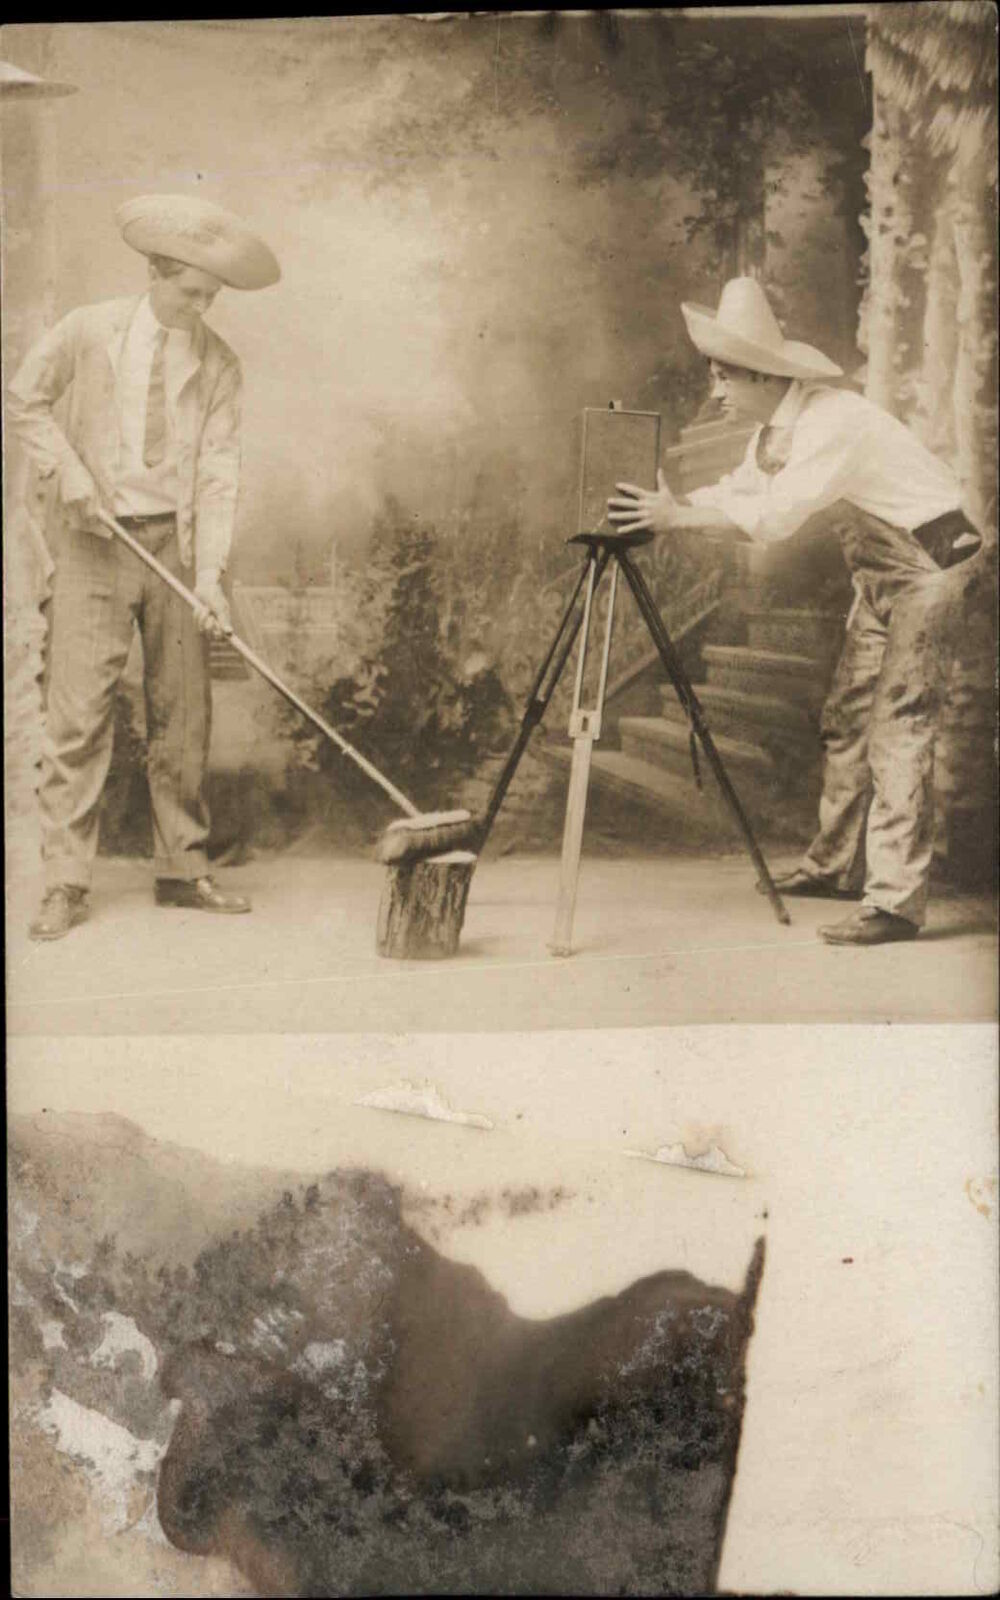 Men in Studio With Camera & Broom Goofy Hats Unusual Real Photo Postcard